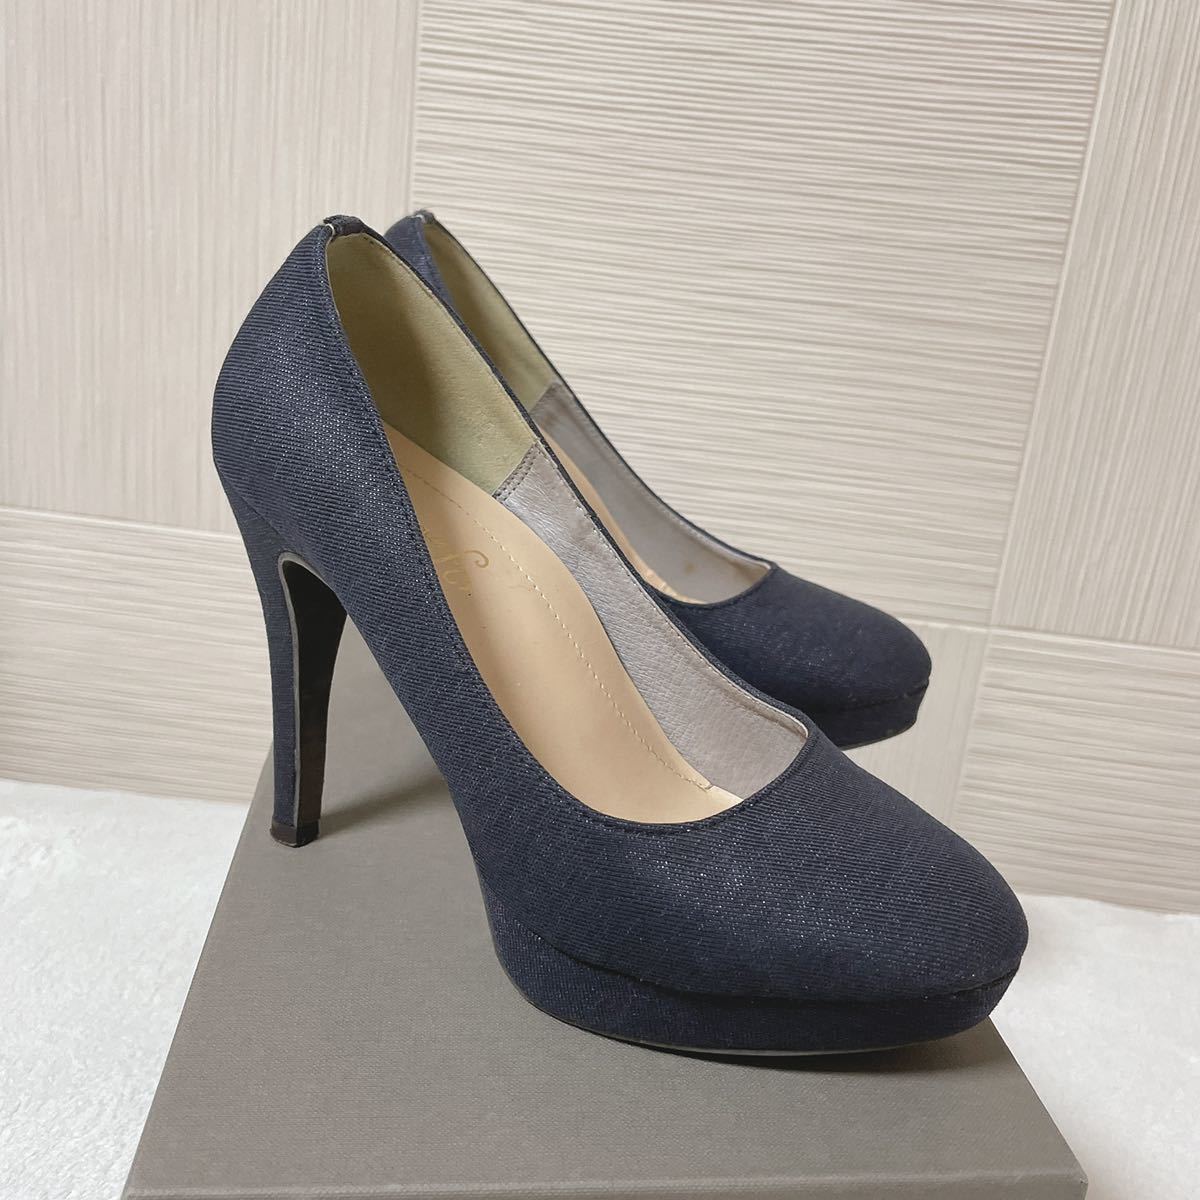  prompt decision * Denim material. pumps high heel 23 centimeter beautiful goods 